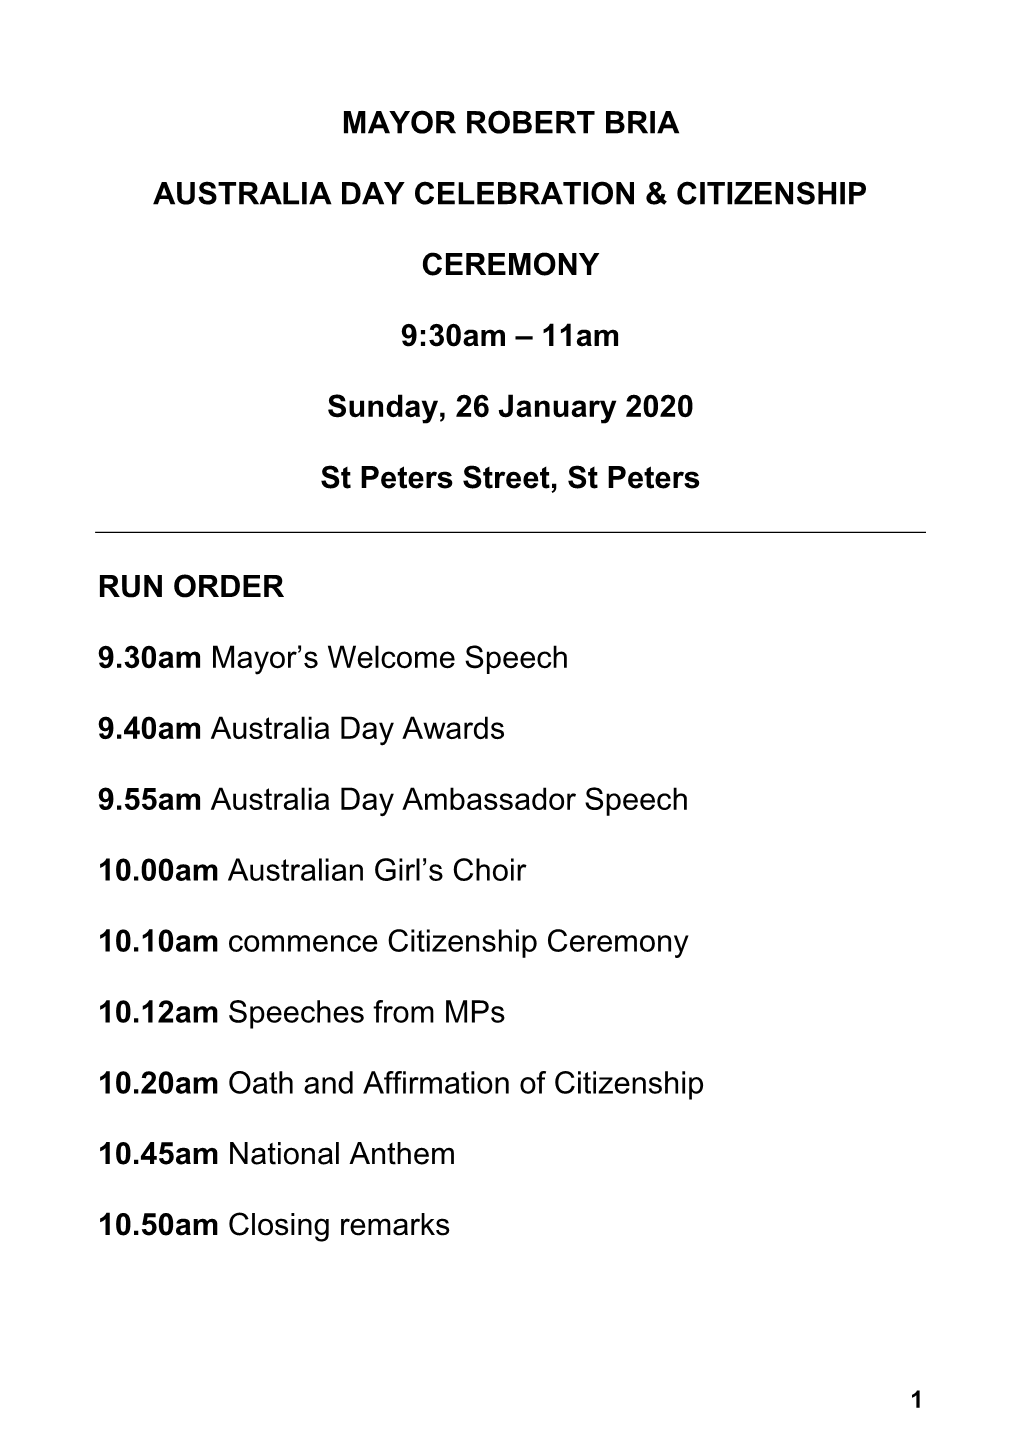 Australia Day and Citizenship Ceremony 2020